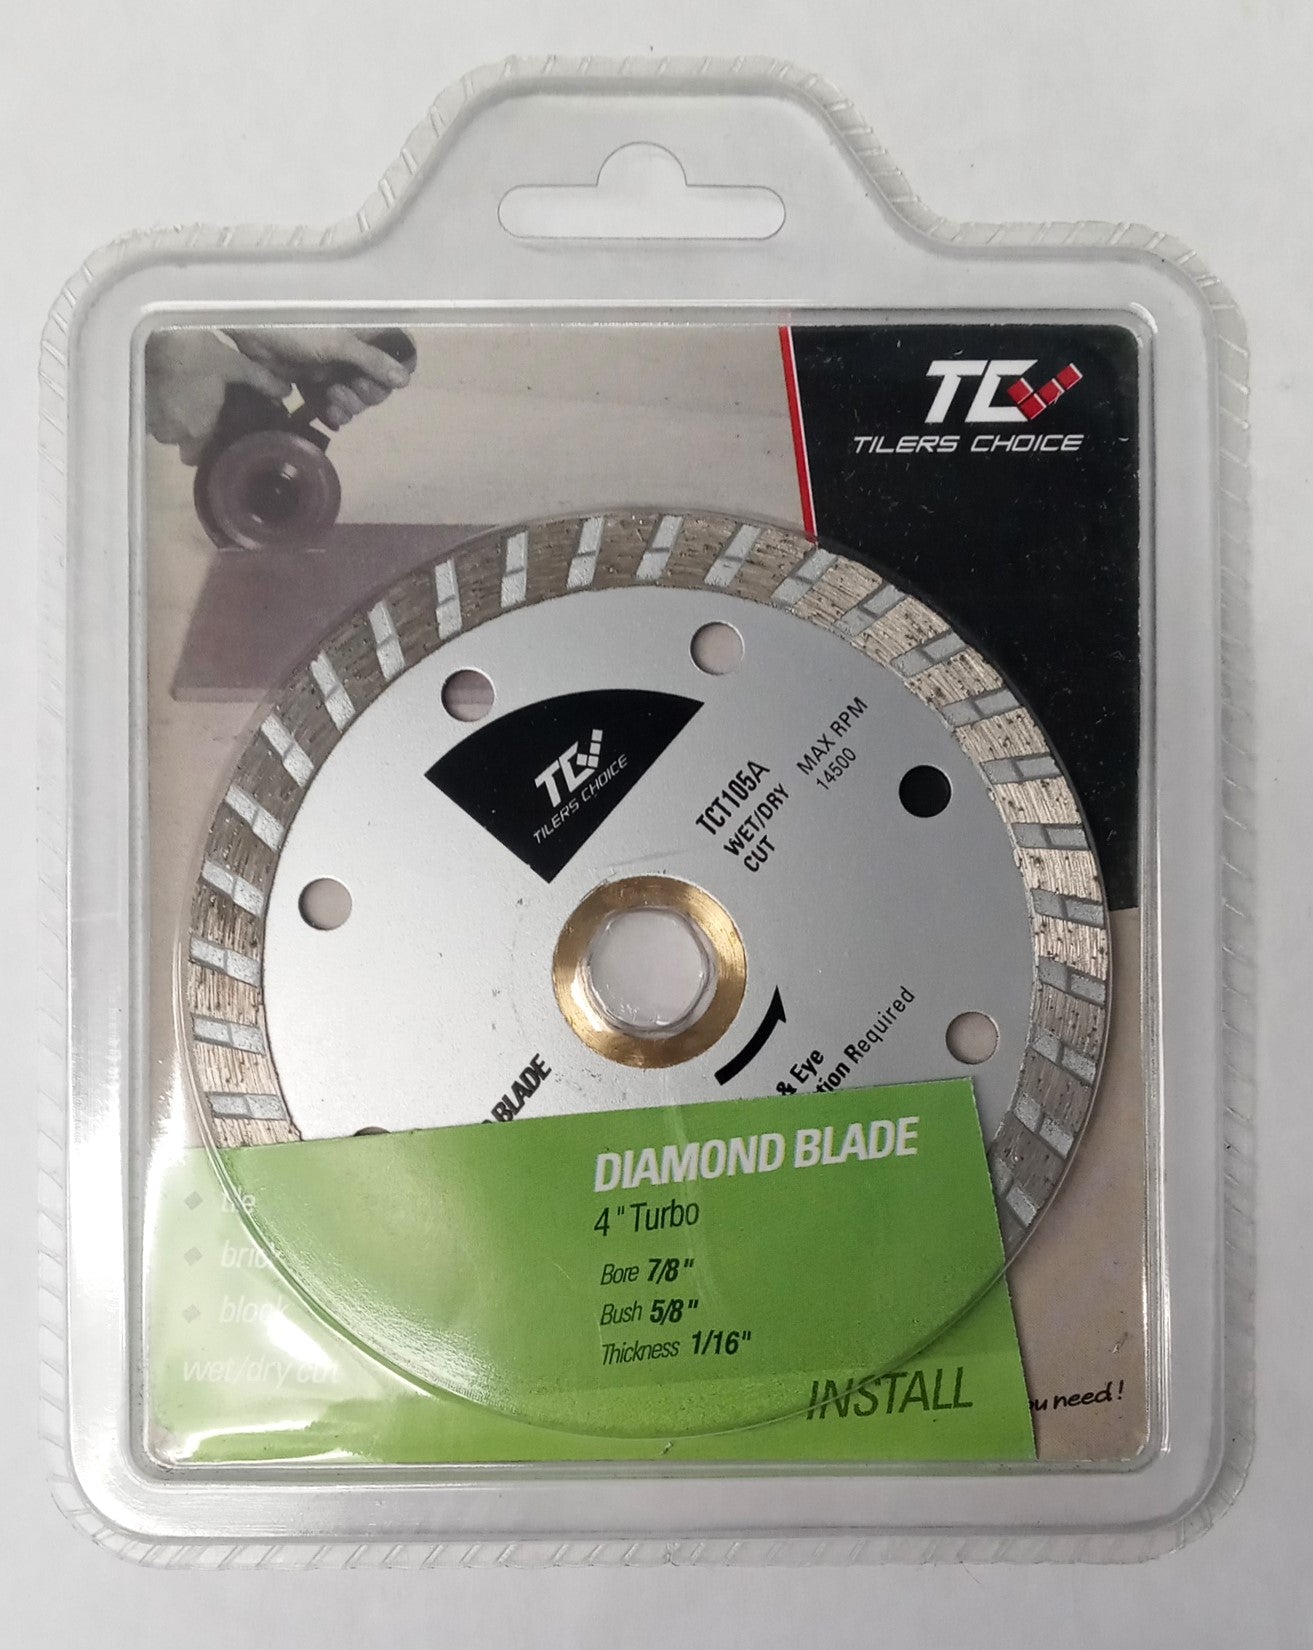 DTA TCT105A 4" Tiler's Choice Turbo Rim Diamond Blade for Tile